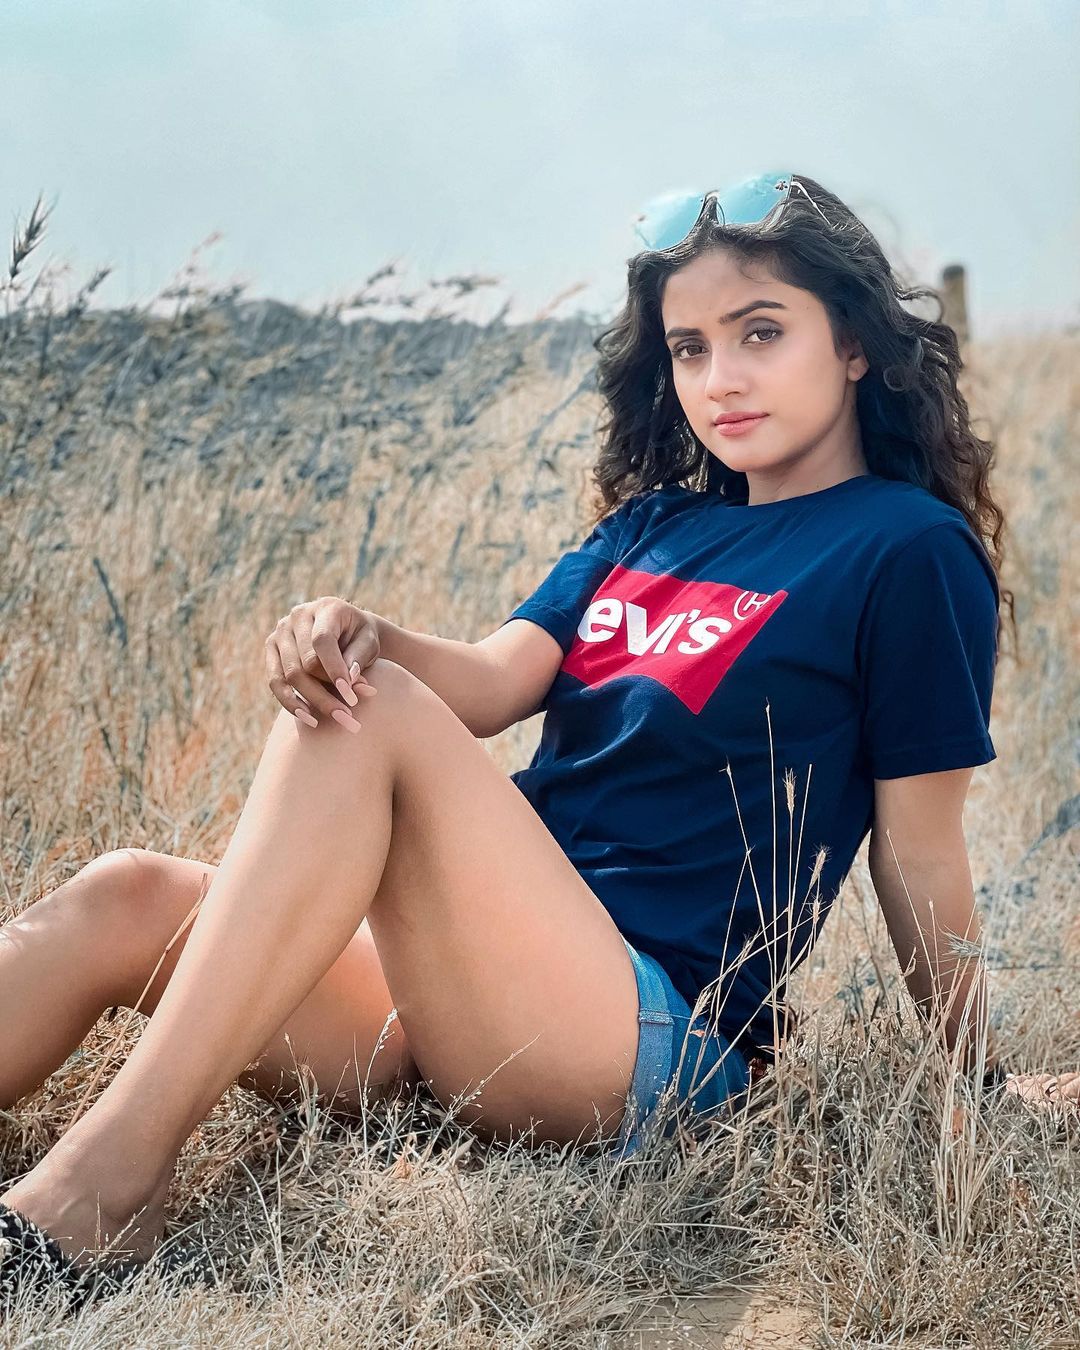 Nisha Guragain sitting in grass